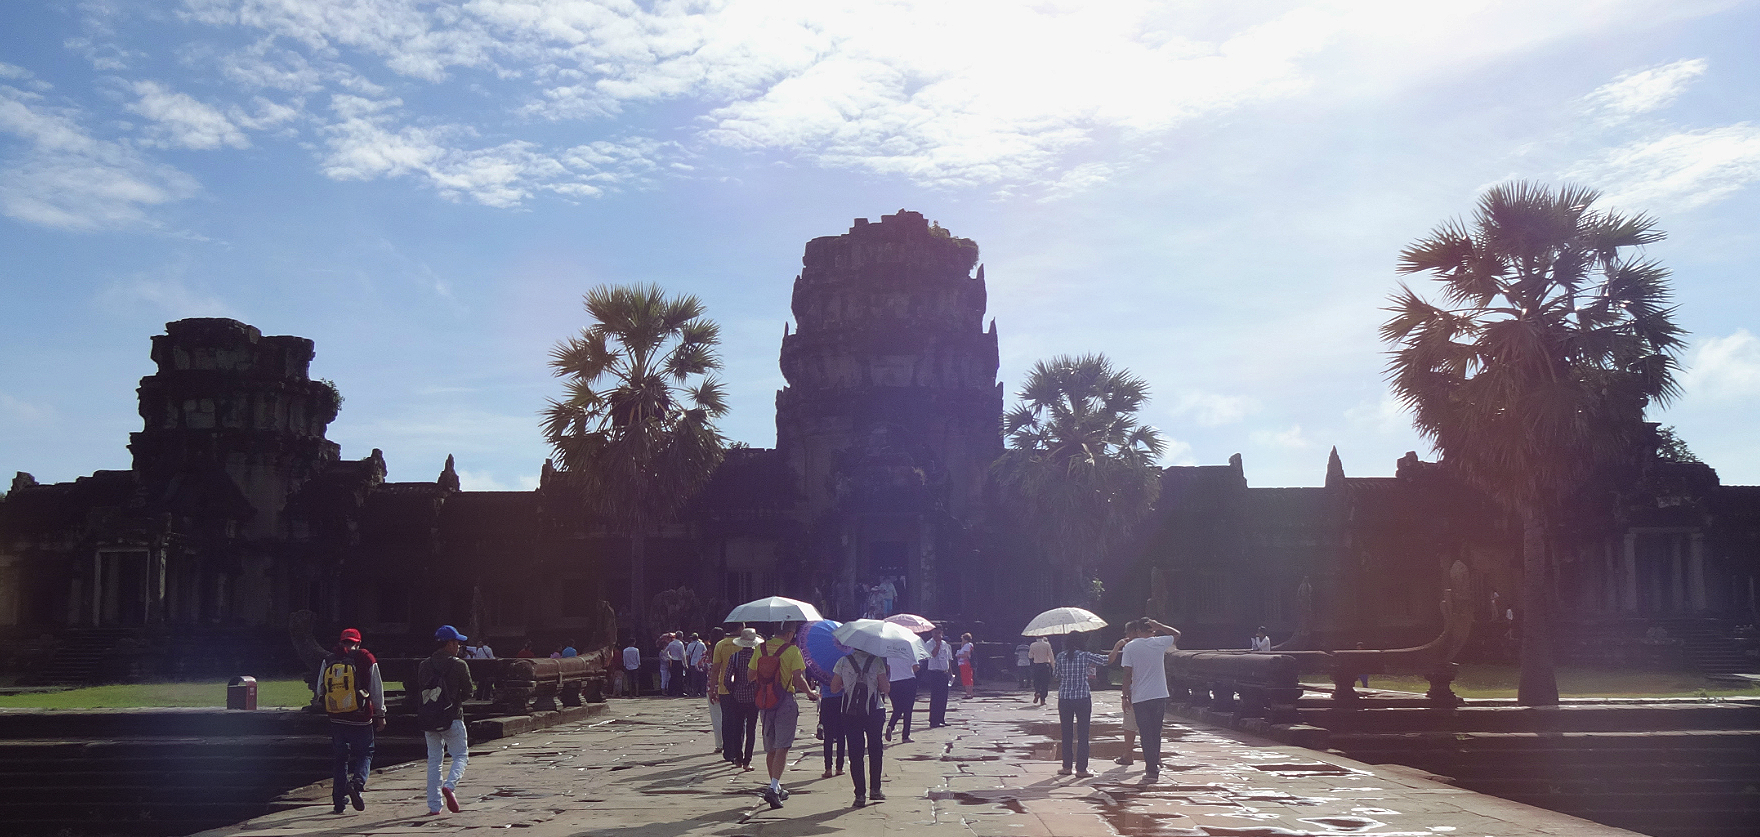 The grand entrance to Angkor Wat